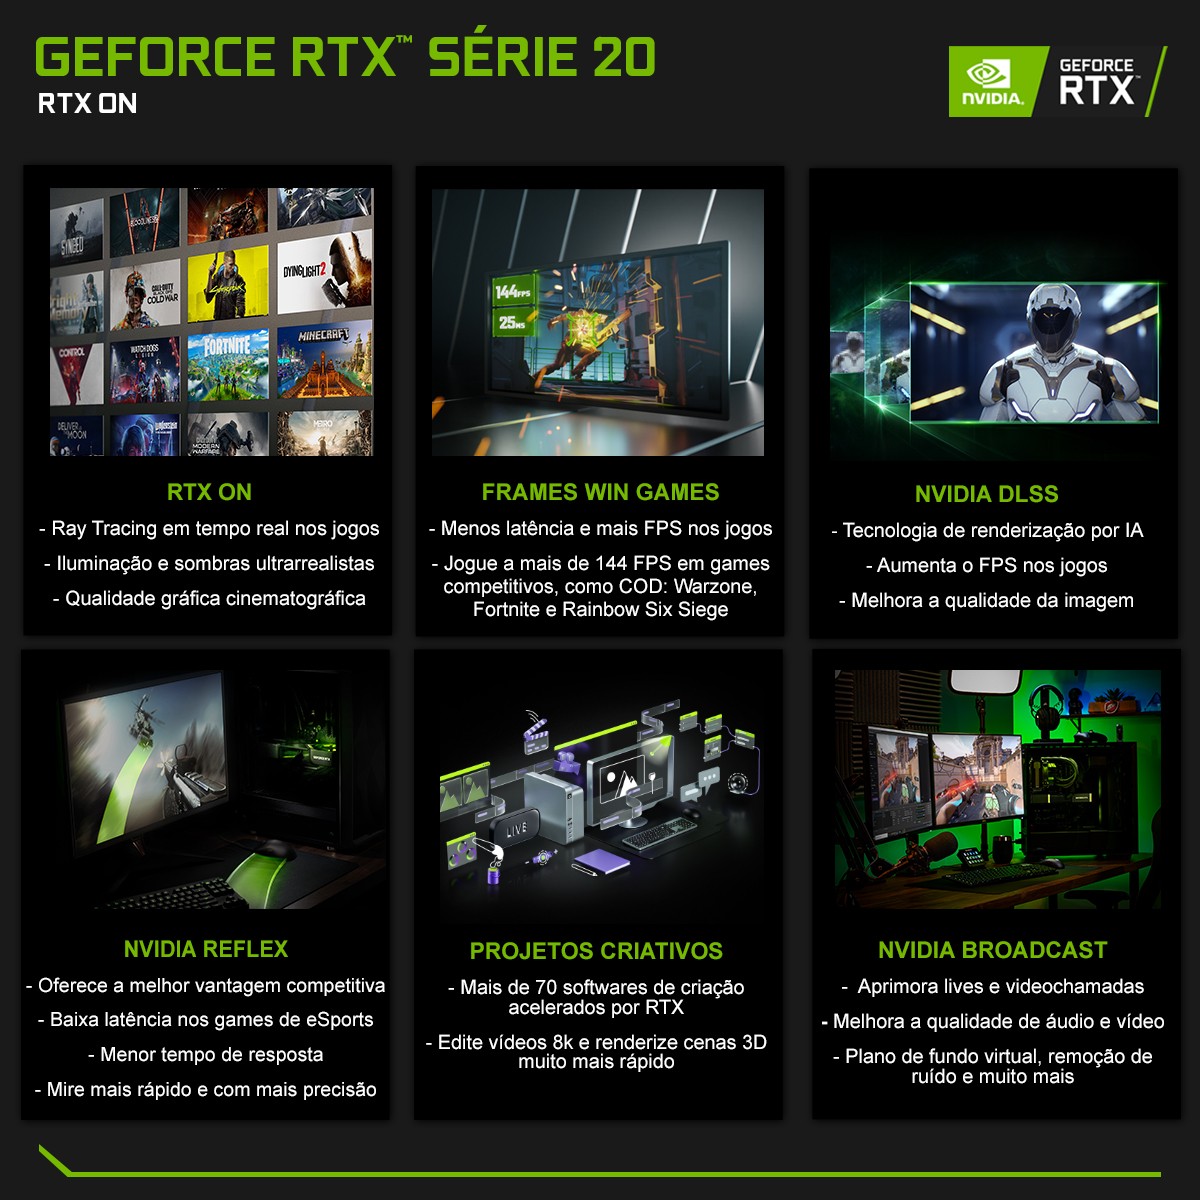 Placa de Vídeo Asus NVIDIA GeForce RTX 2080 EVO Dual, 8GB, GDDR6, 256Bit, DUAL-RTX2080-A8G-EVO